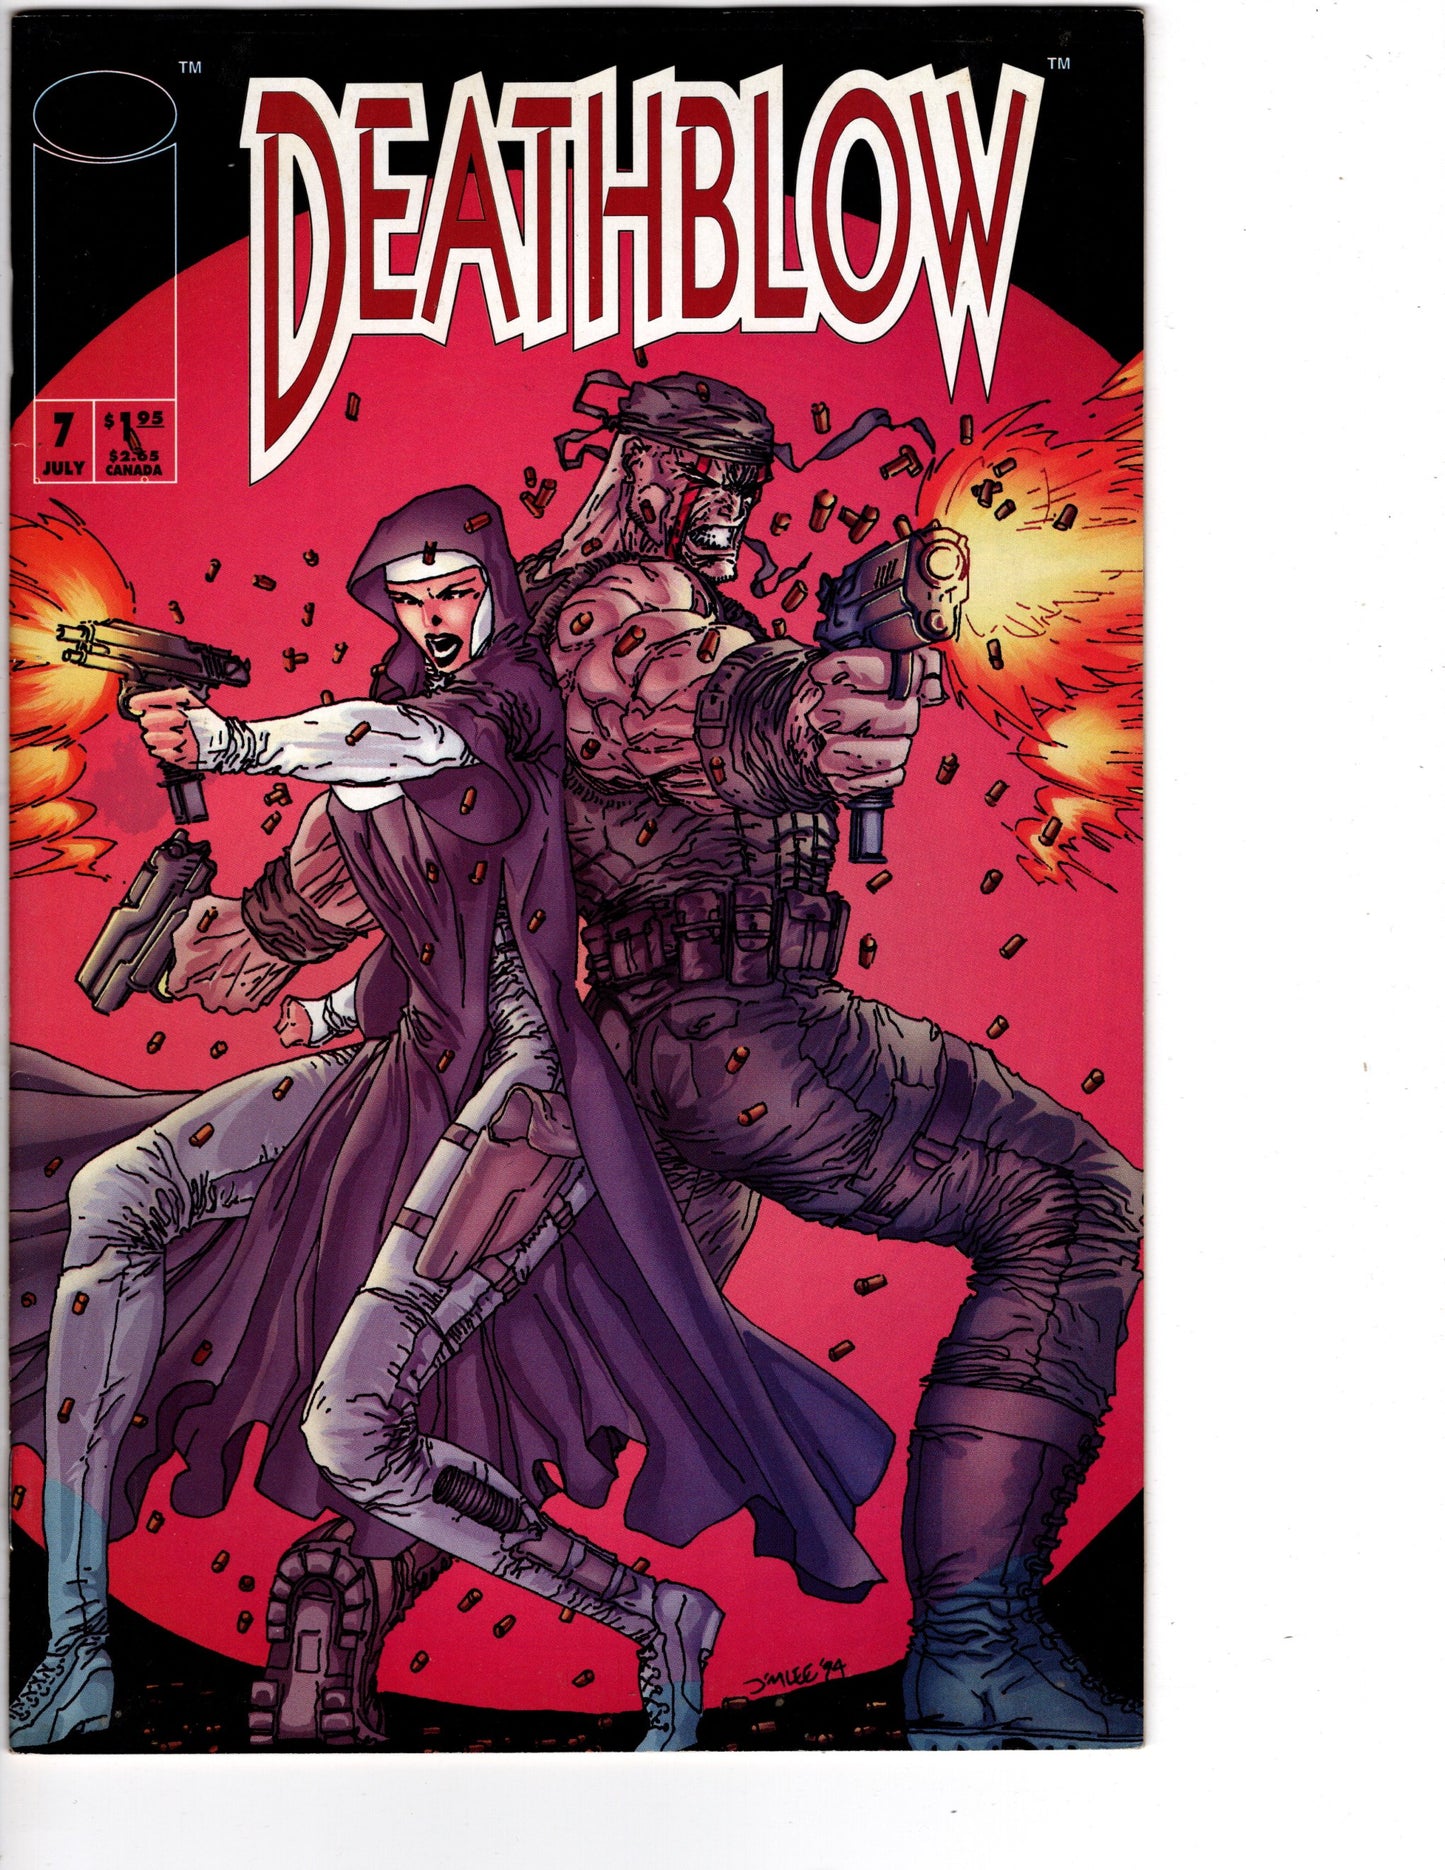 Deathblow #7